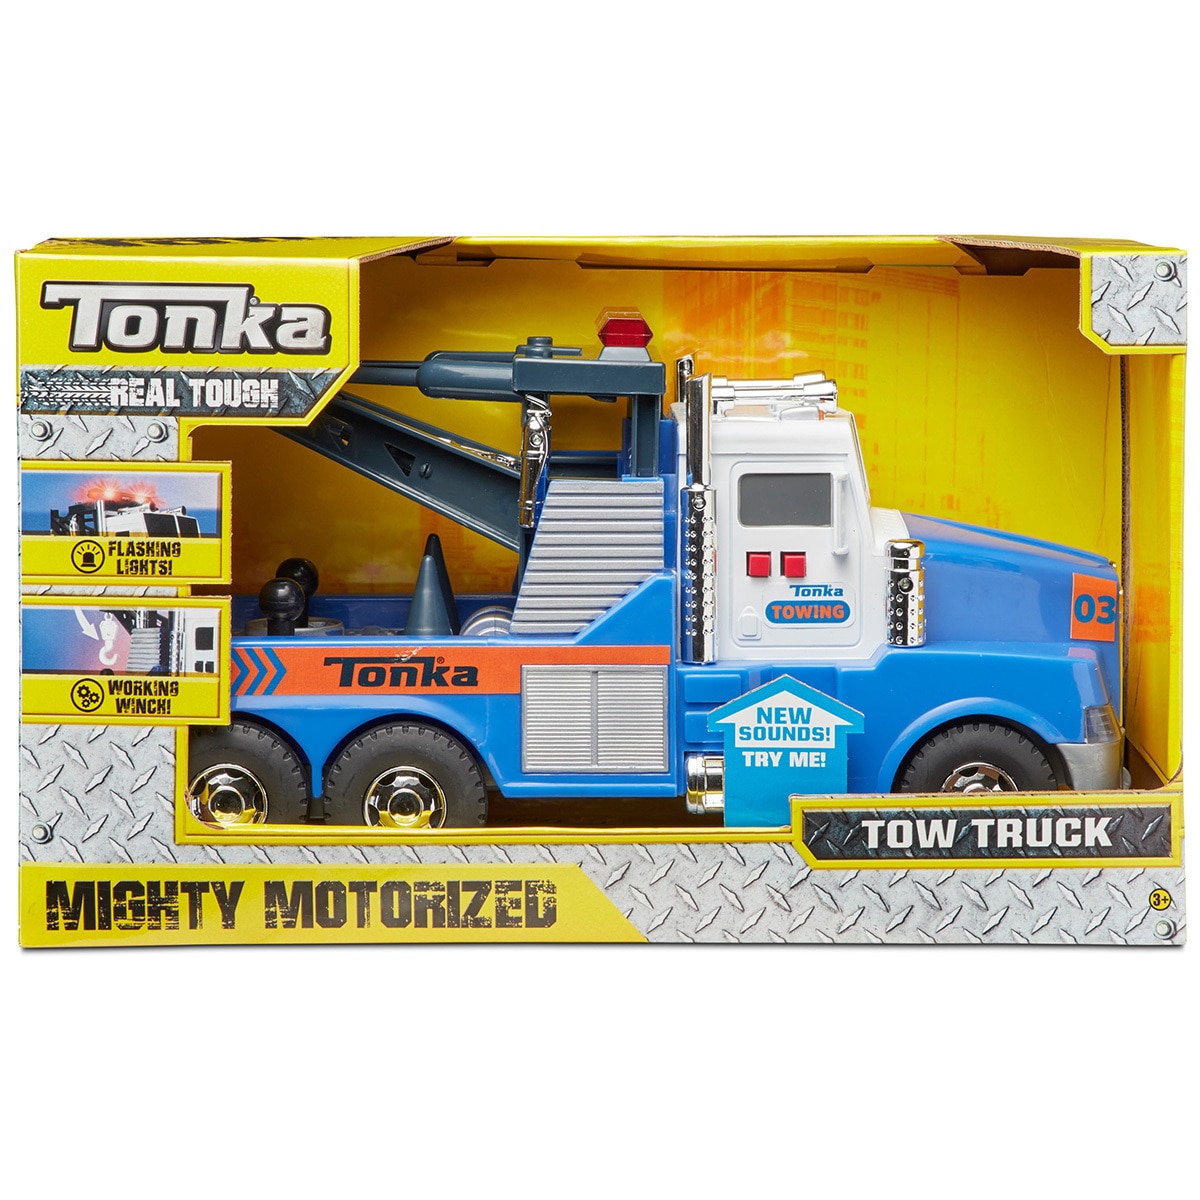 costco toy truck